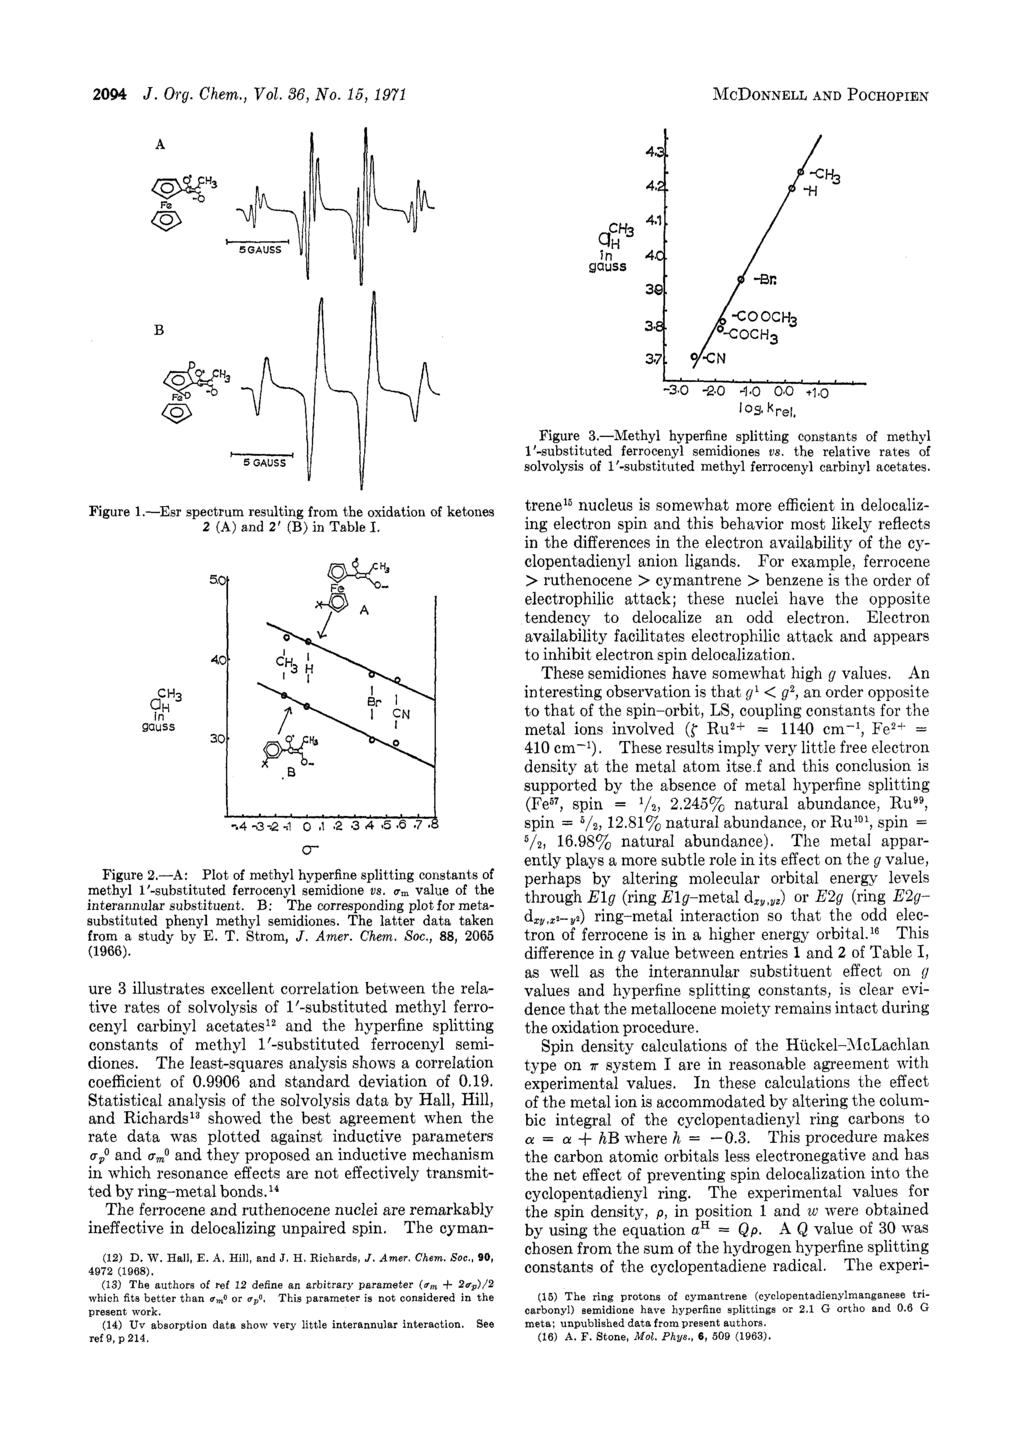 294 J. Ory. Chem., Vol. 36, No. 15, 1971 4 d in 4. gauss 38 p; MCDONNELL AND POCHOPEN / Figure 3.-Methyl hyperfine splitting constants of methyl 1 -substituted ferrocenyl semidiones us.